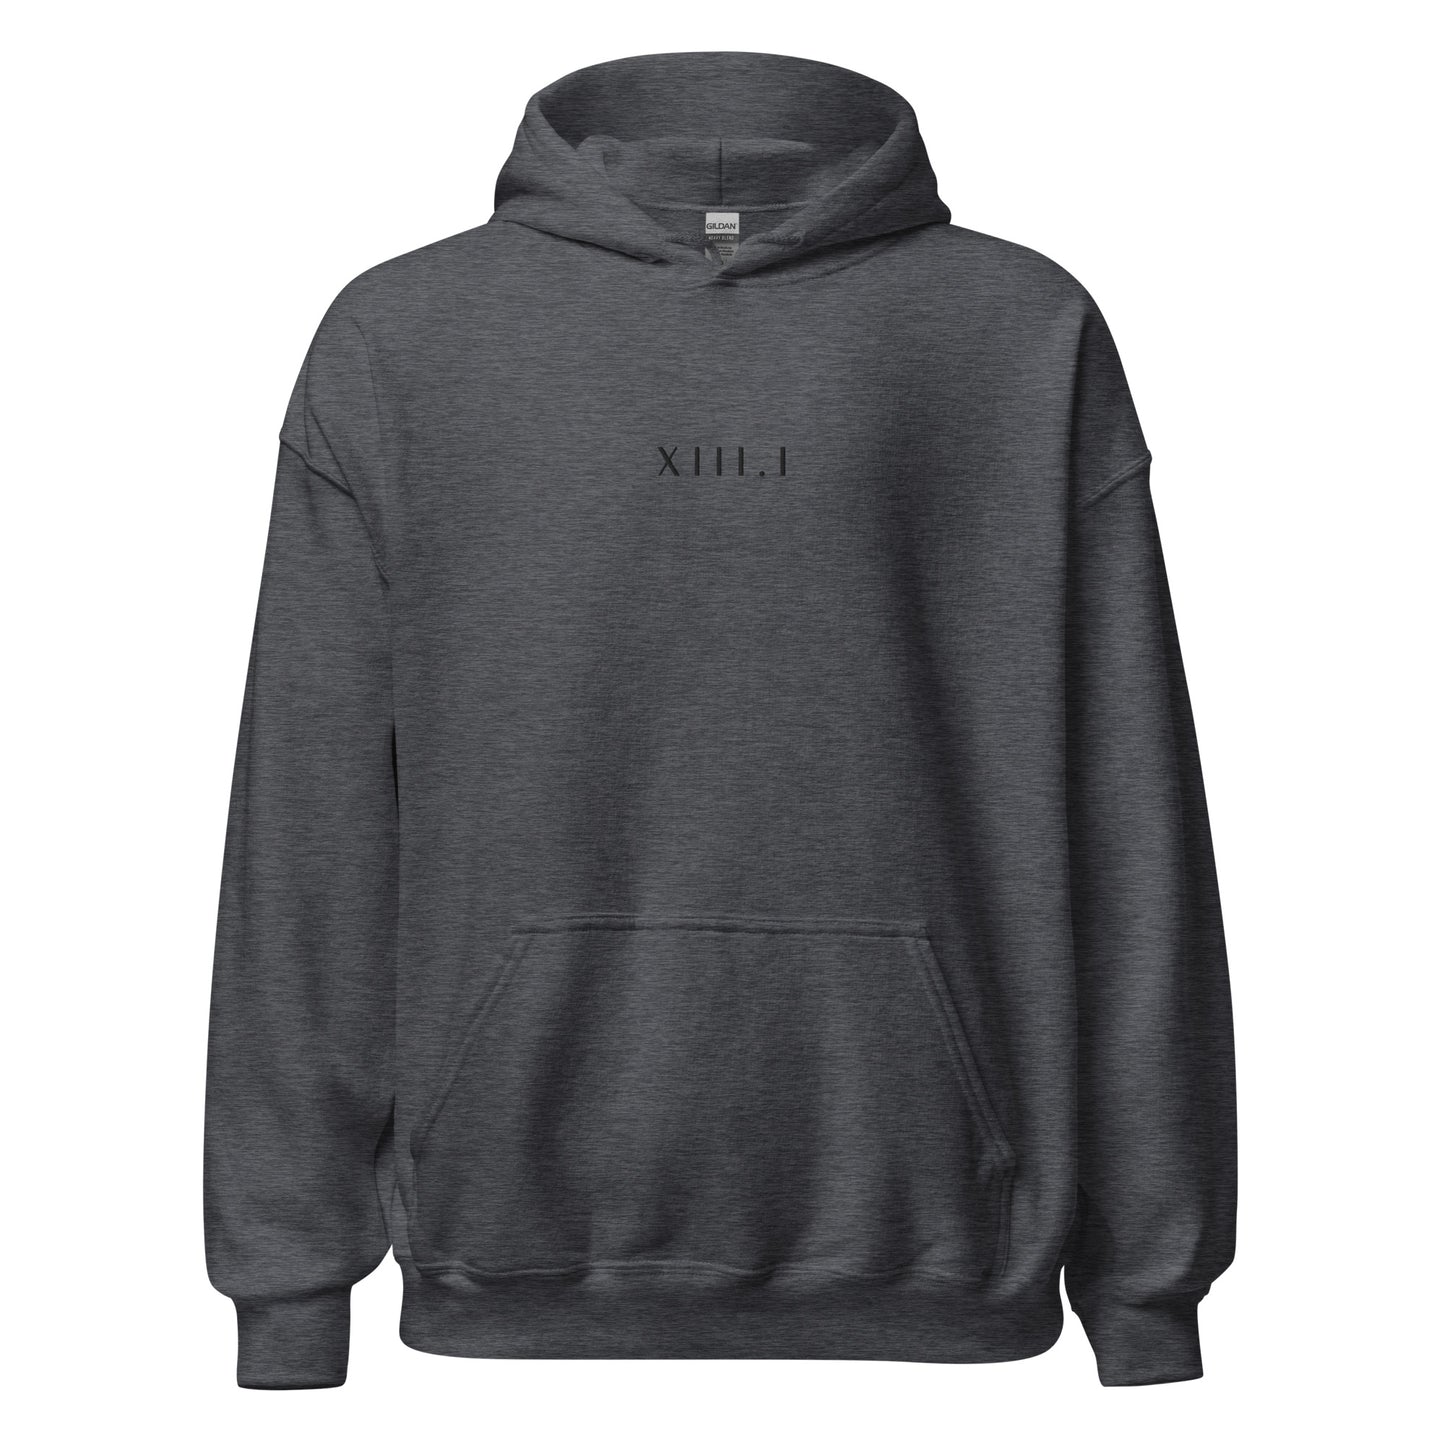 dark grey unisex hoodie with XIII.I 13.1 half marathon in roman numerals embroidered in black writing